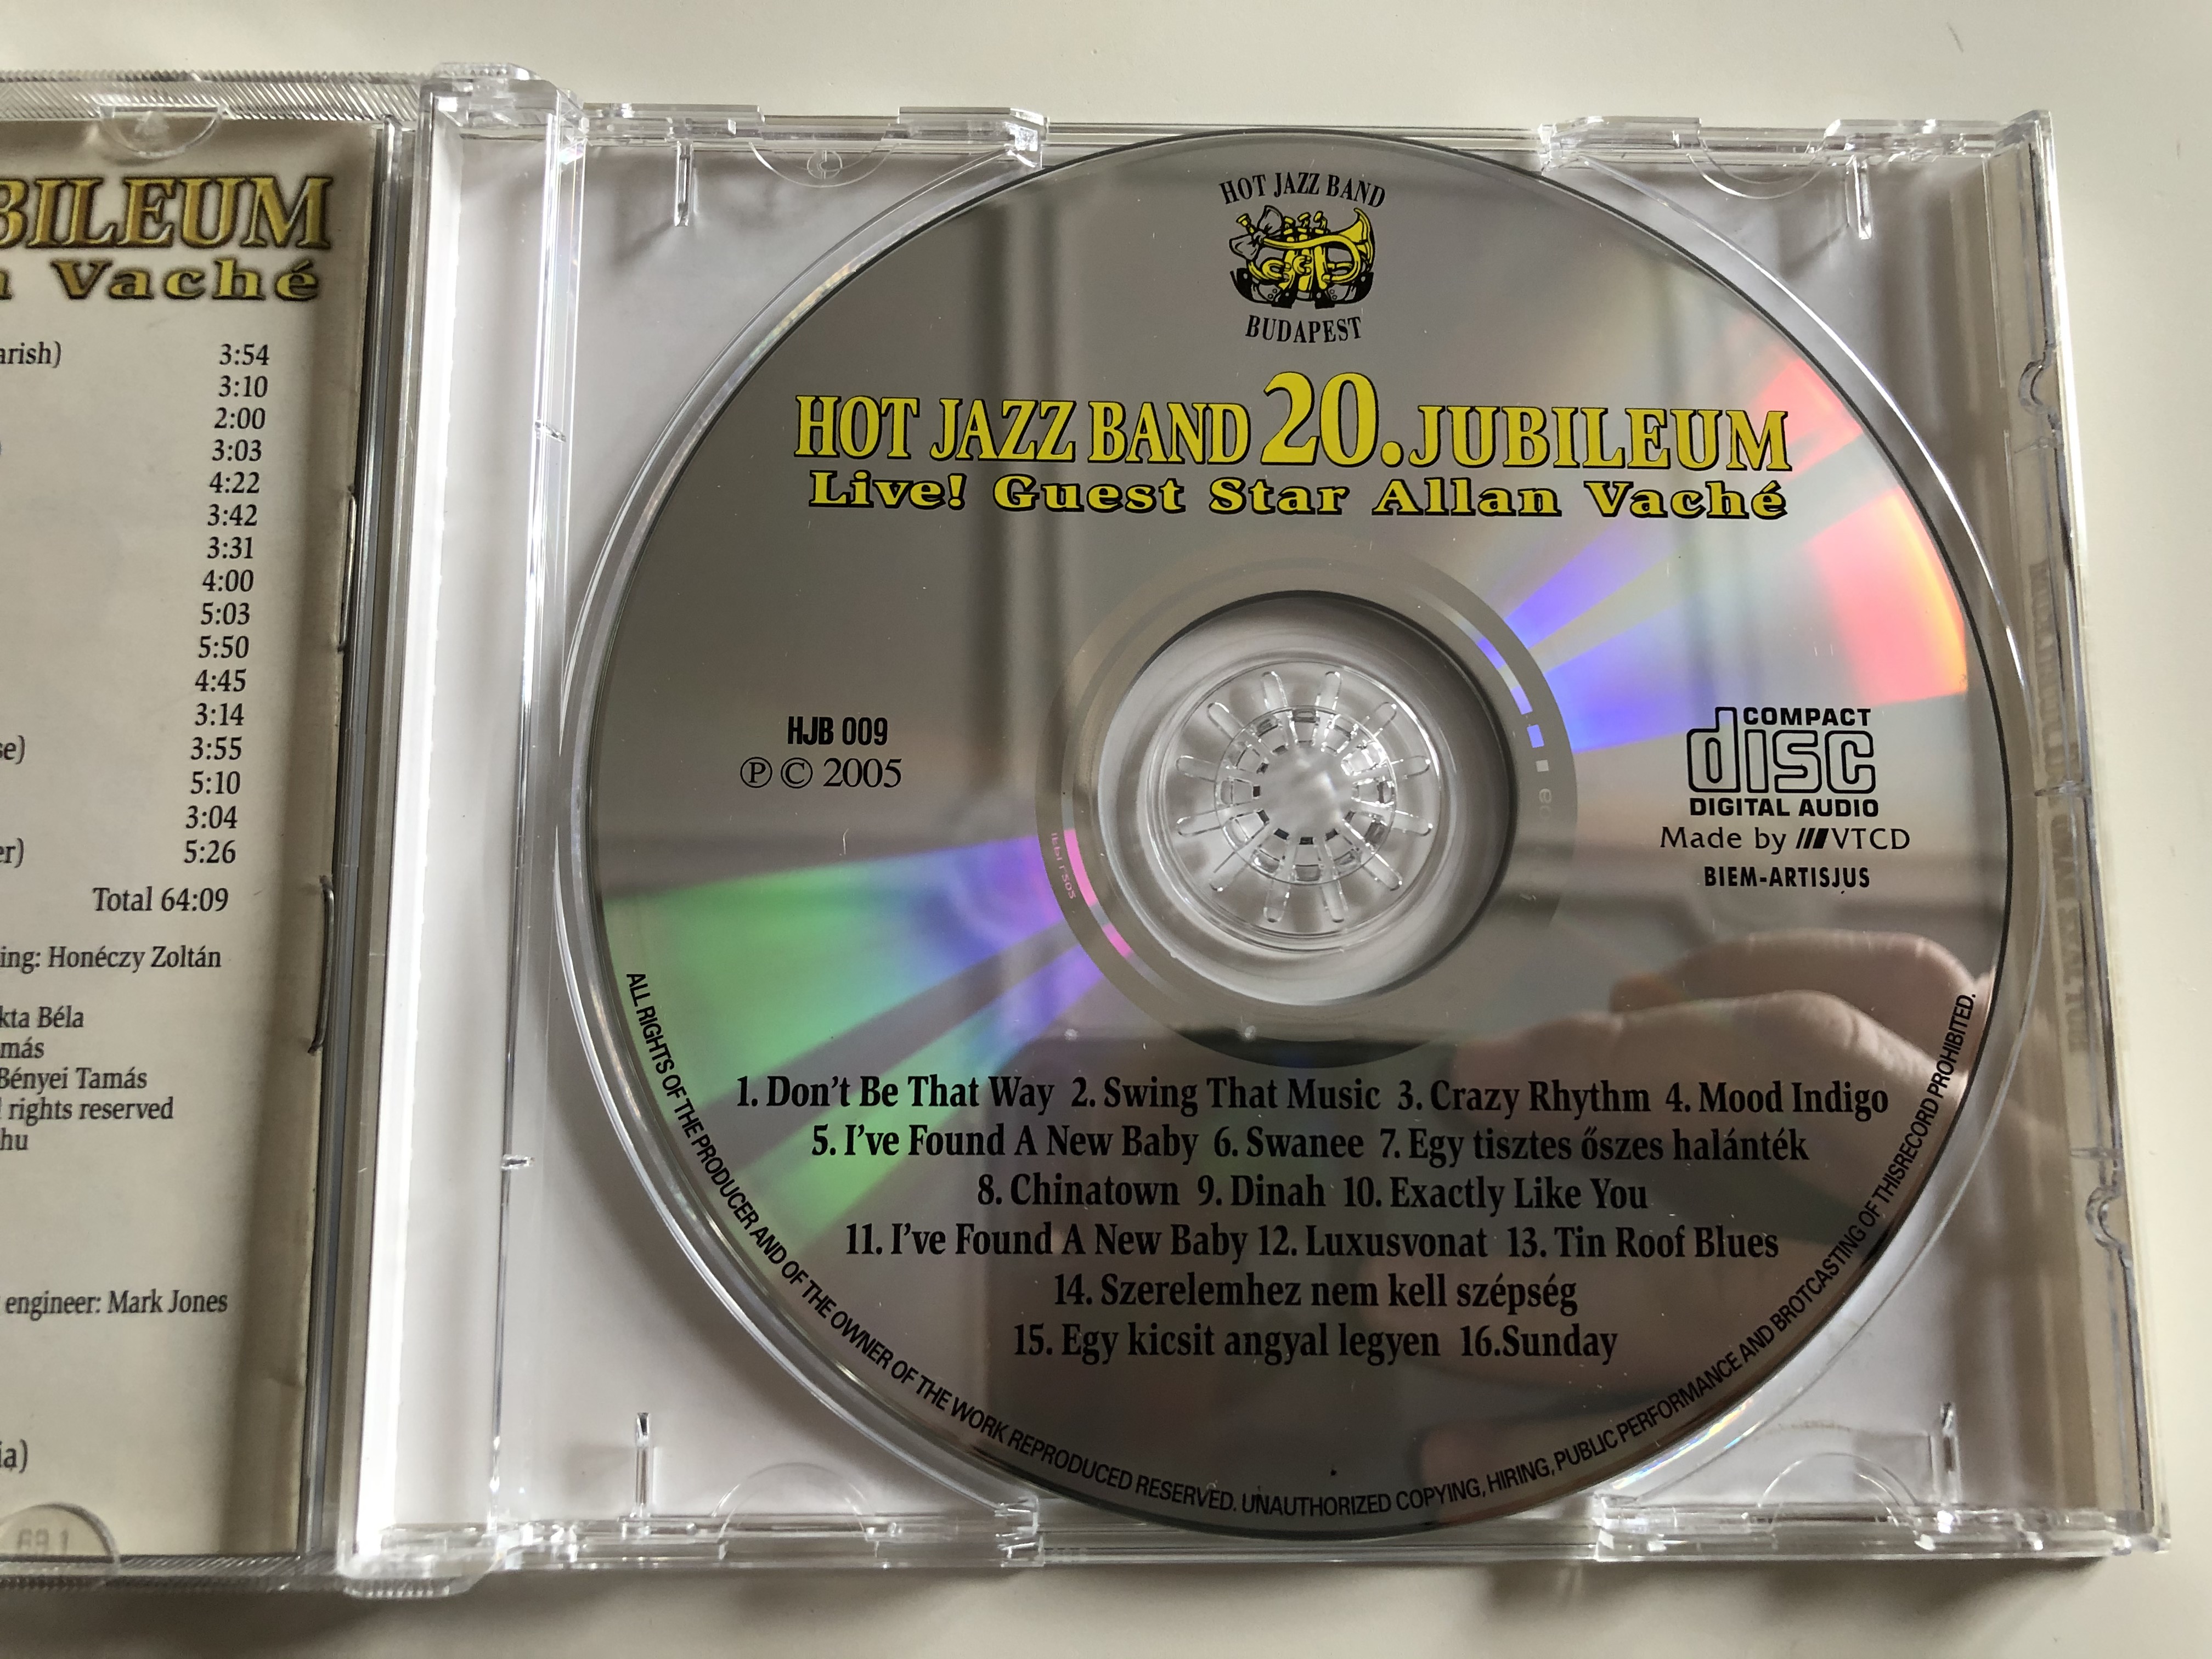 hot-jazz-band-live-allan-vache-usa-20.jubileum-hot-jazz-band-budapest-audio-cd-2005-hjb-009-8-.jpg